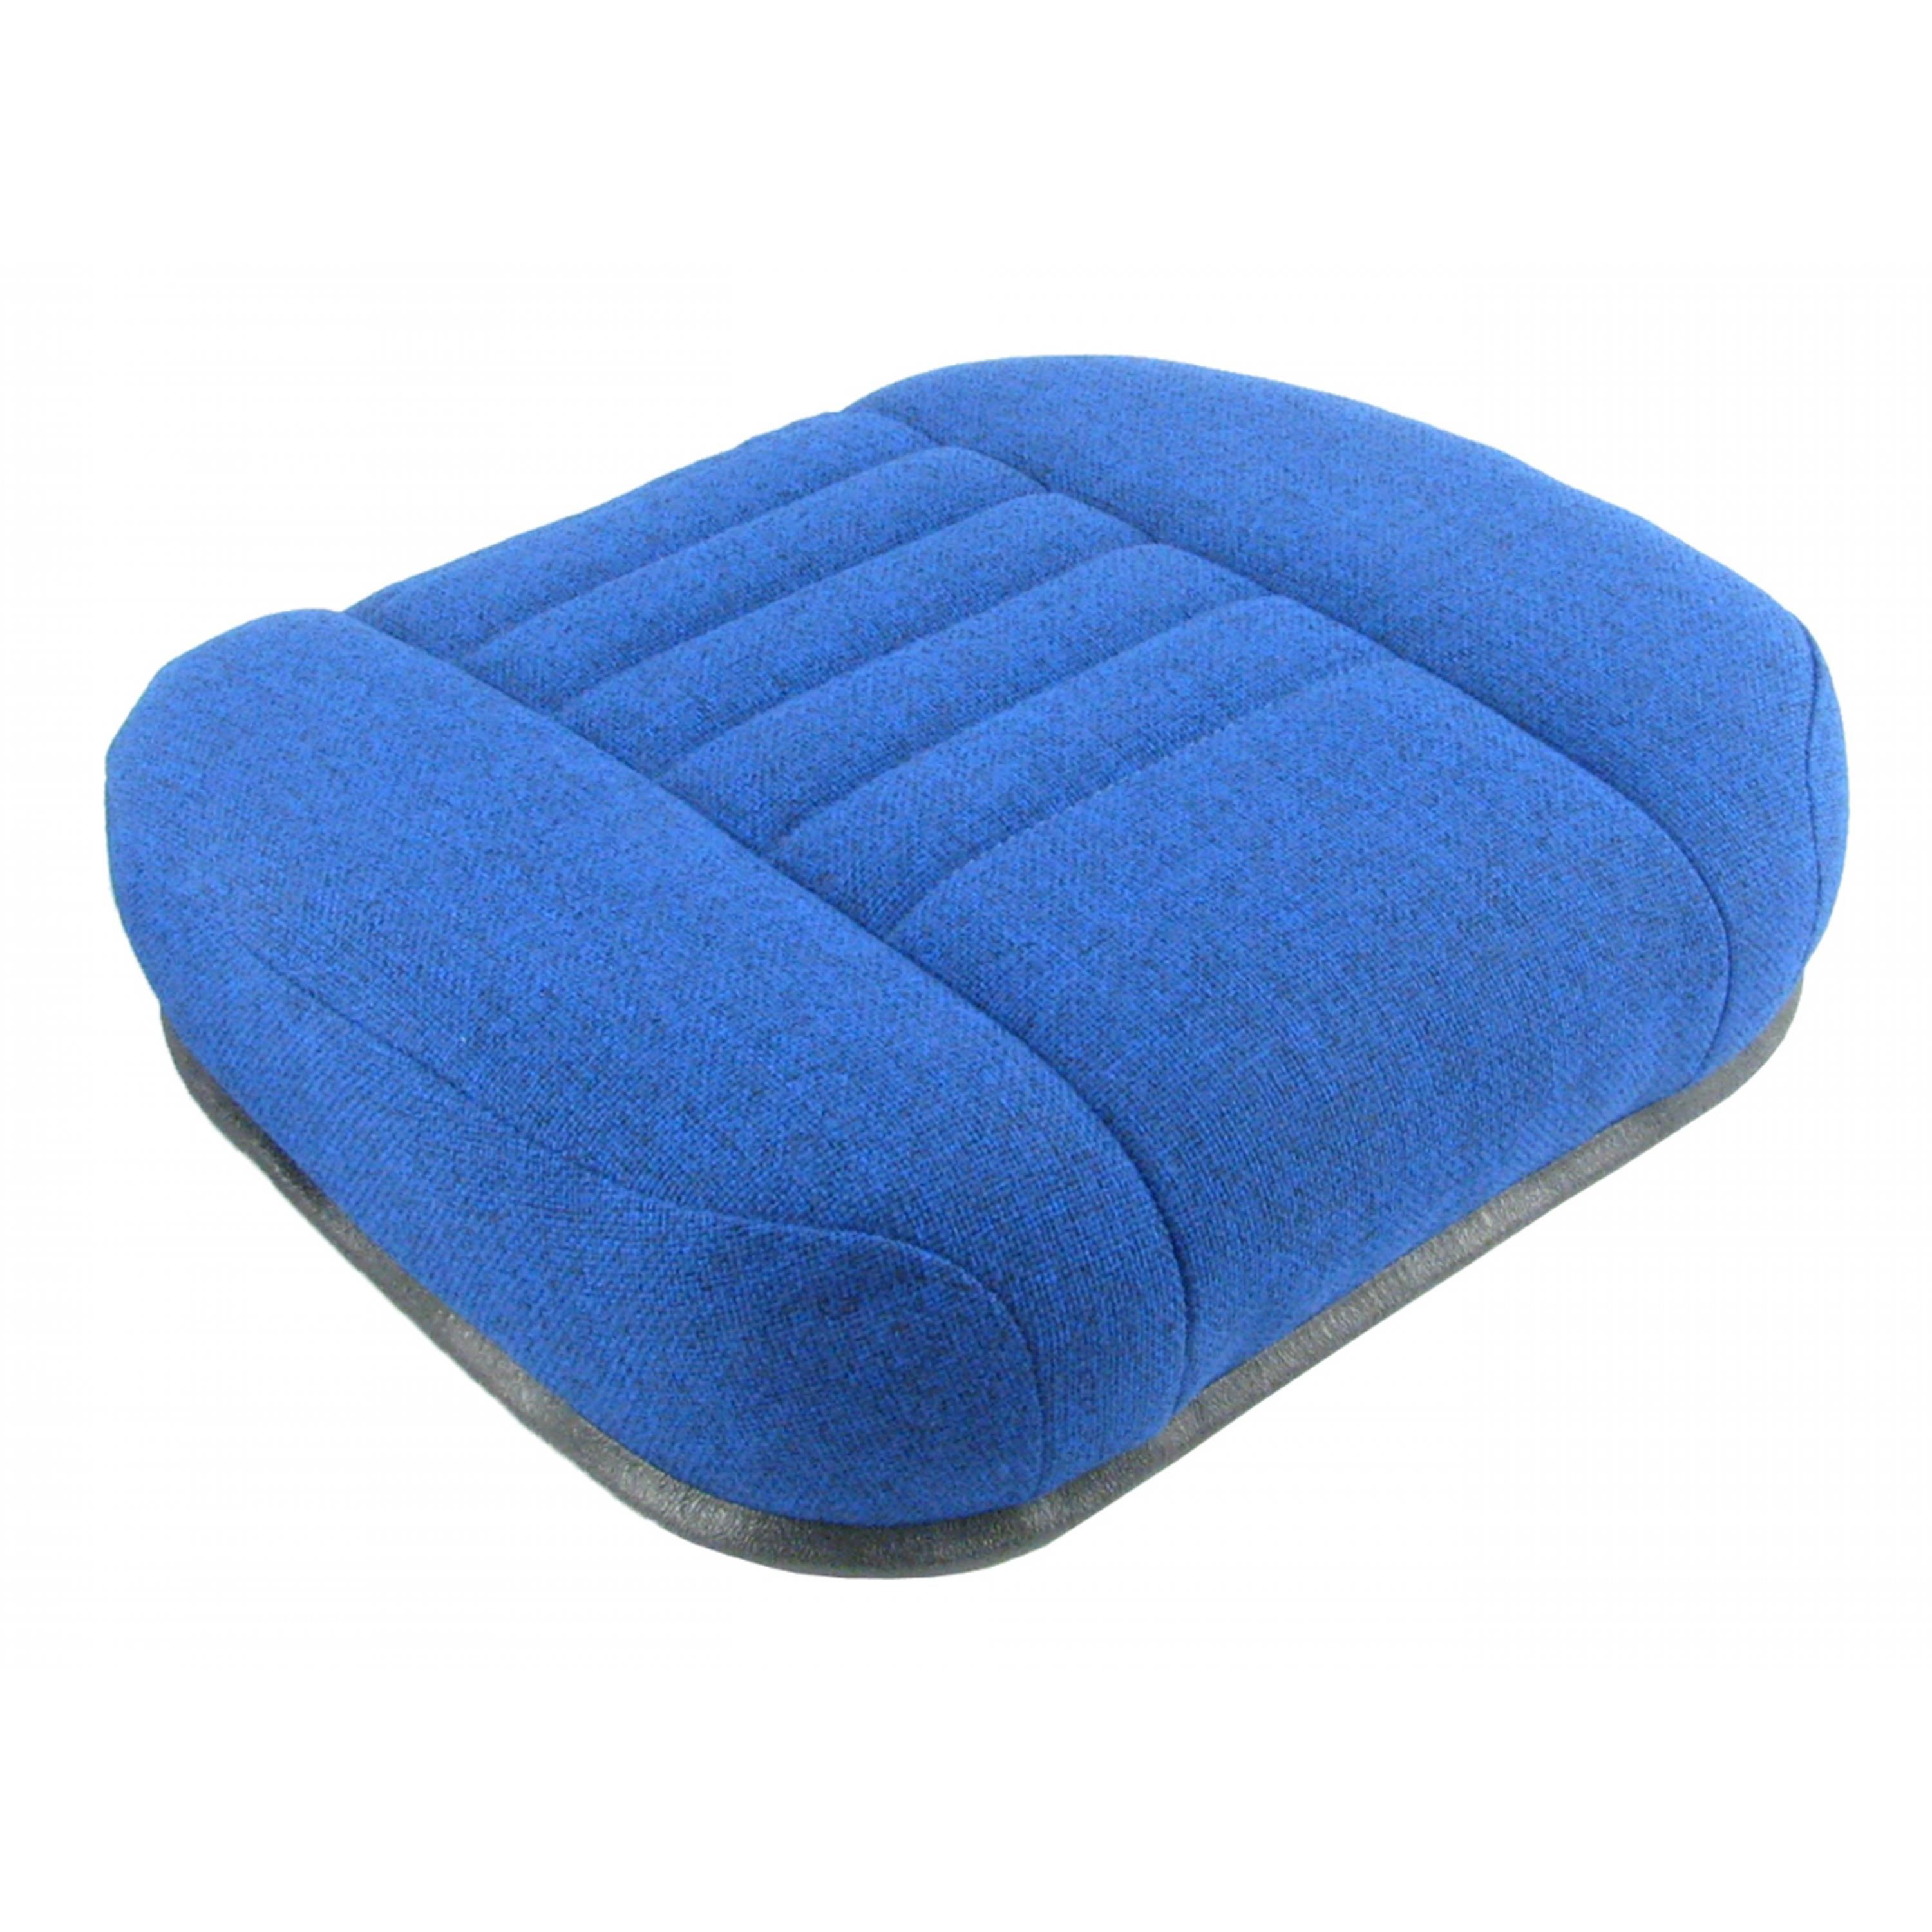 https://www.tractorjoe.com/media/catalog/product/cache/1/image/9df78eab33525d08d6e5fb8d27136e95/HCI/SF44333-seat-cushion-blue-fabric-1.jpg